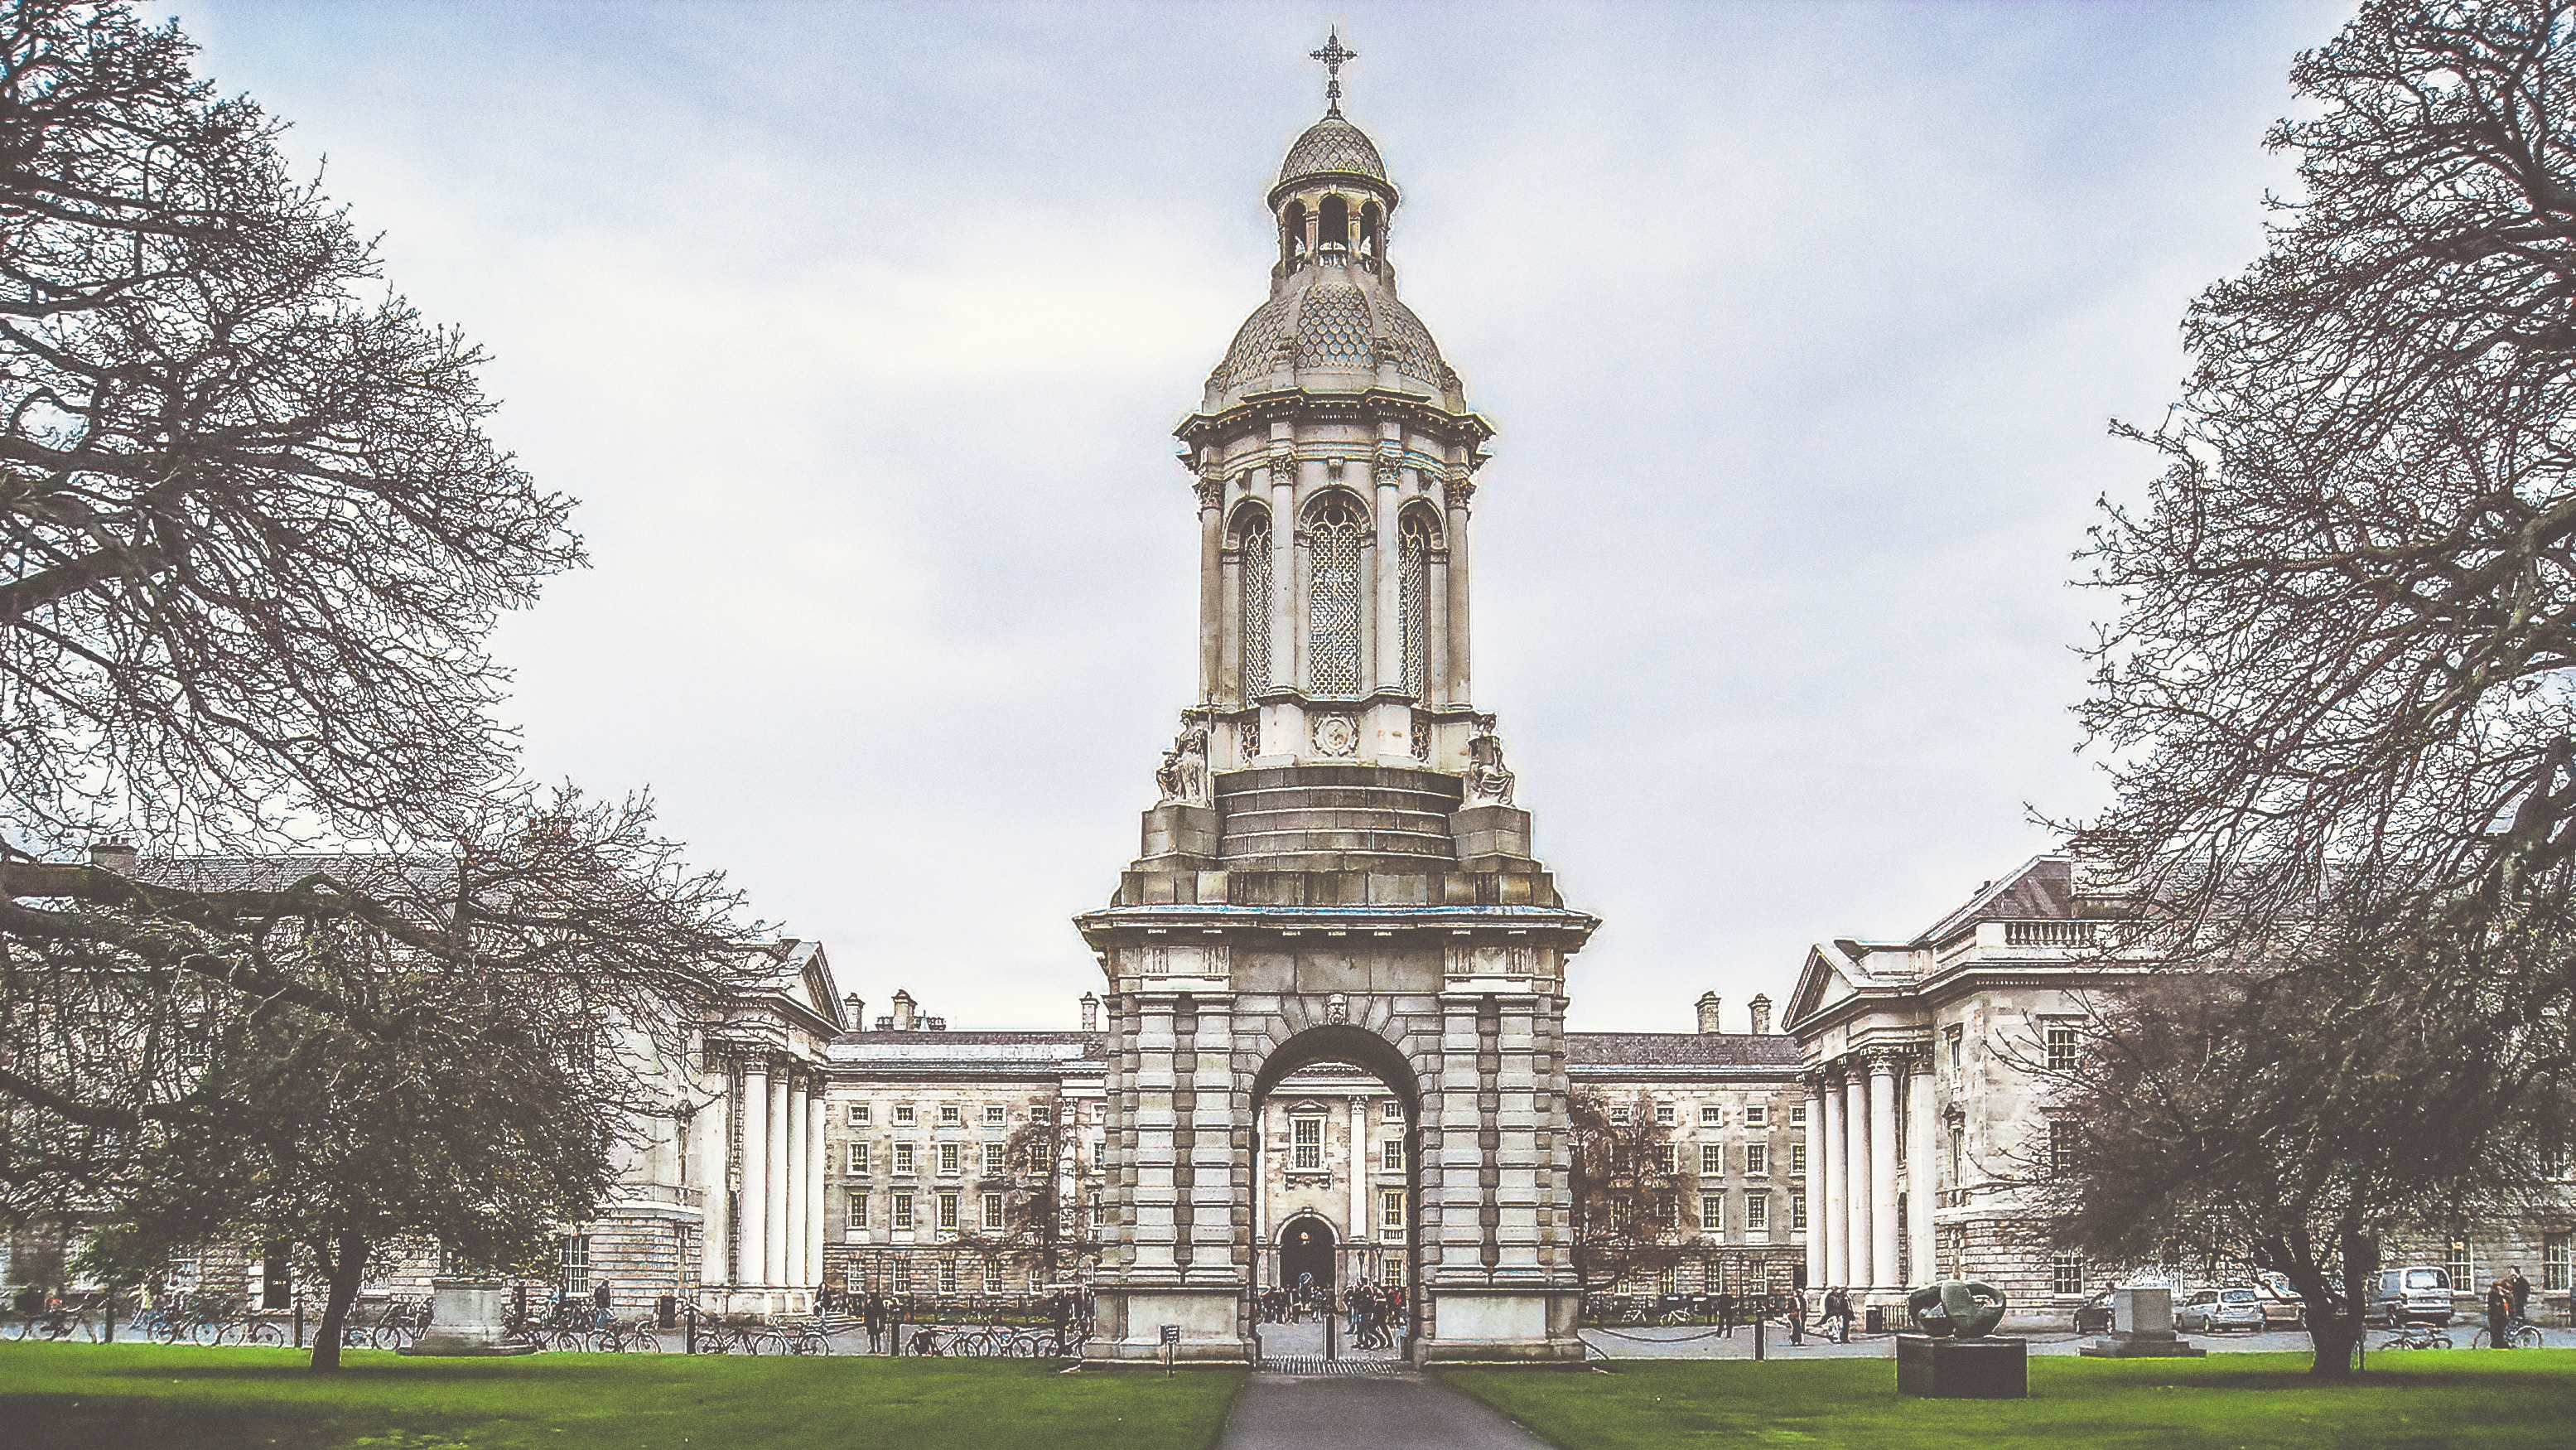 Ranking of University College Dublin in QS World University Rankings